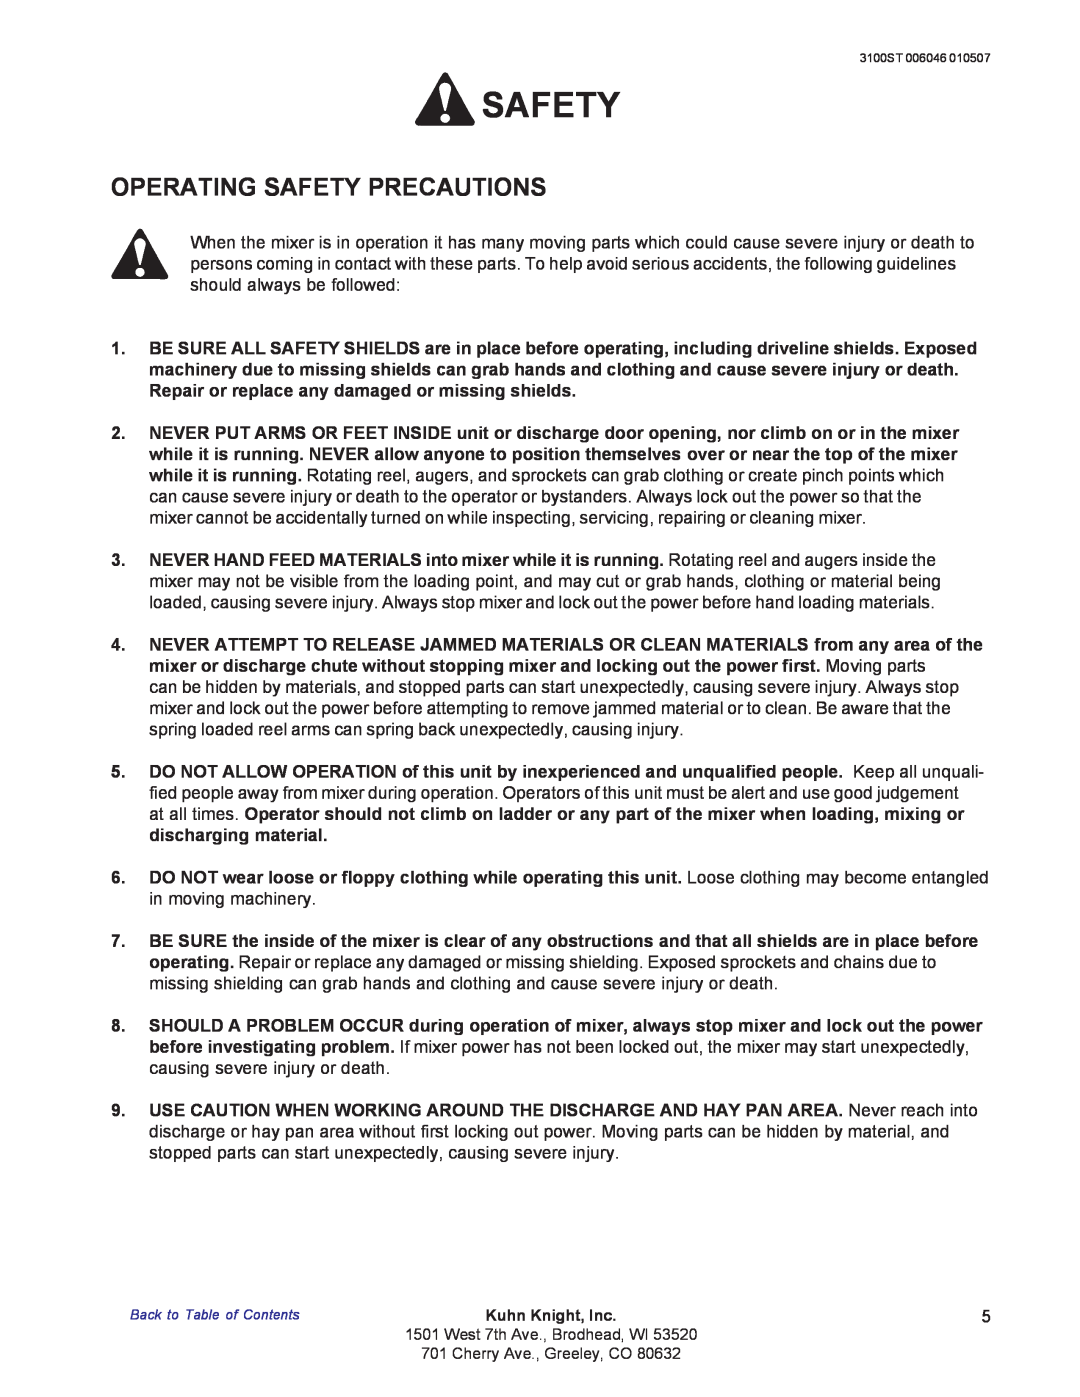 Kuhn Rikon 3100 instruction manual Operating Safety Precautions, Back to Table of ContentsKuhn Knight, Inc.5 